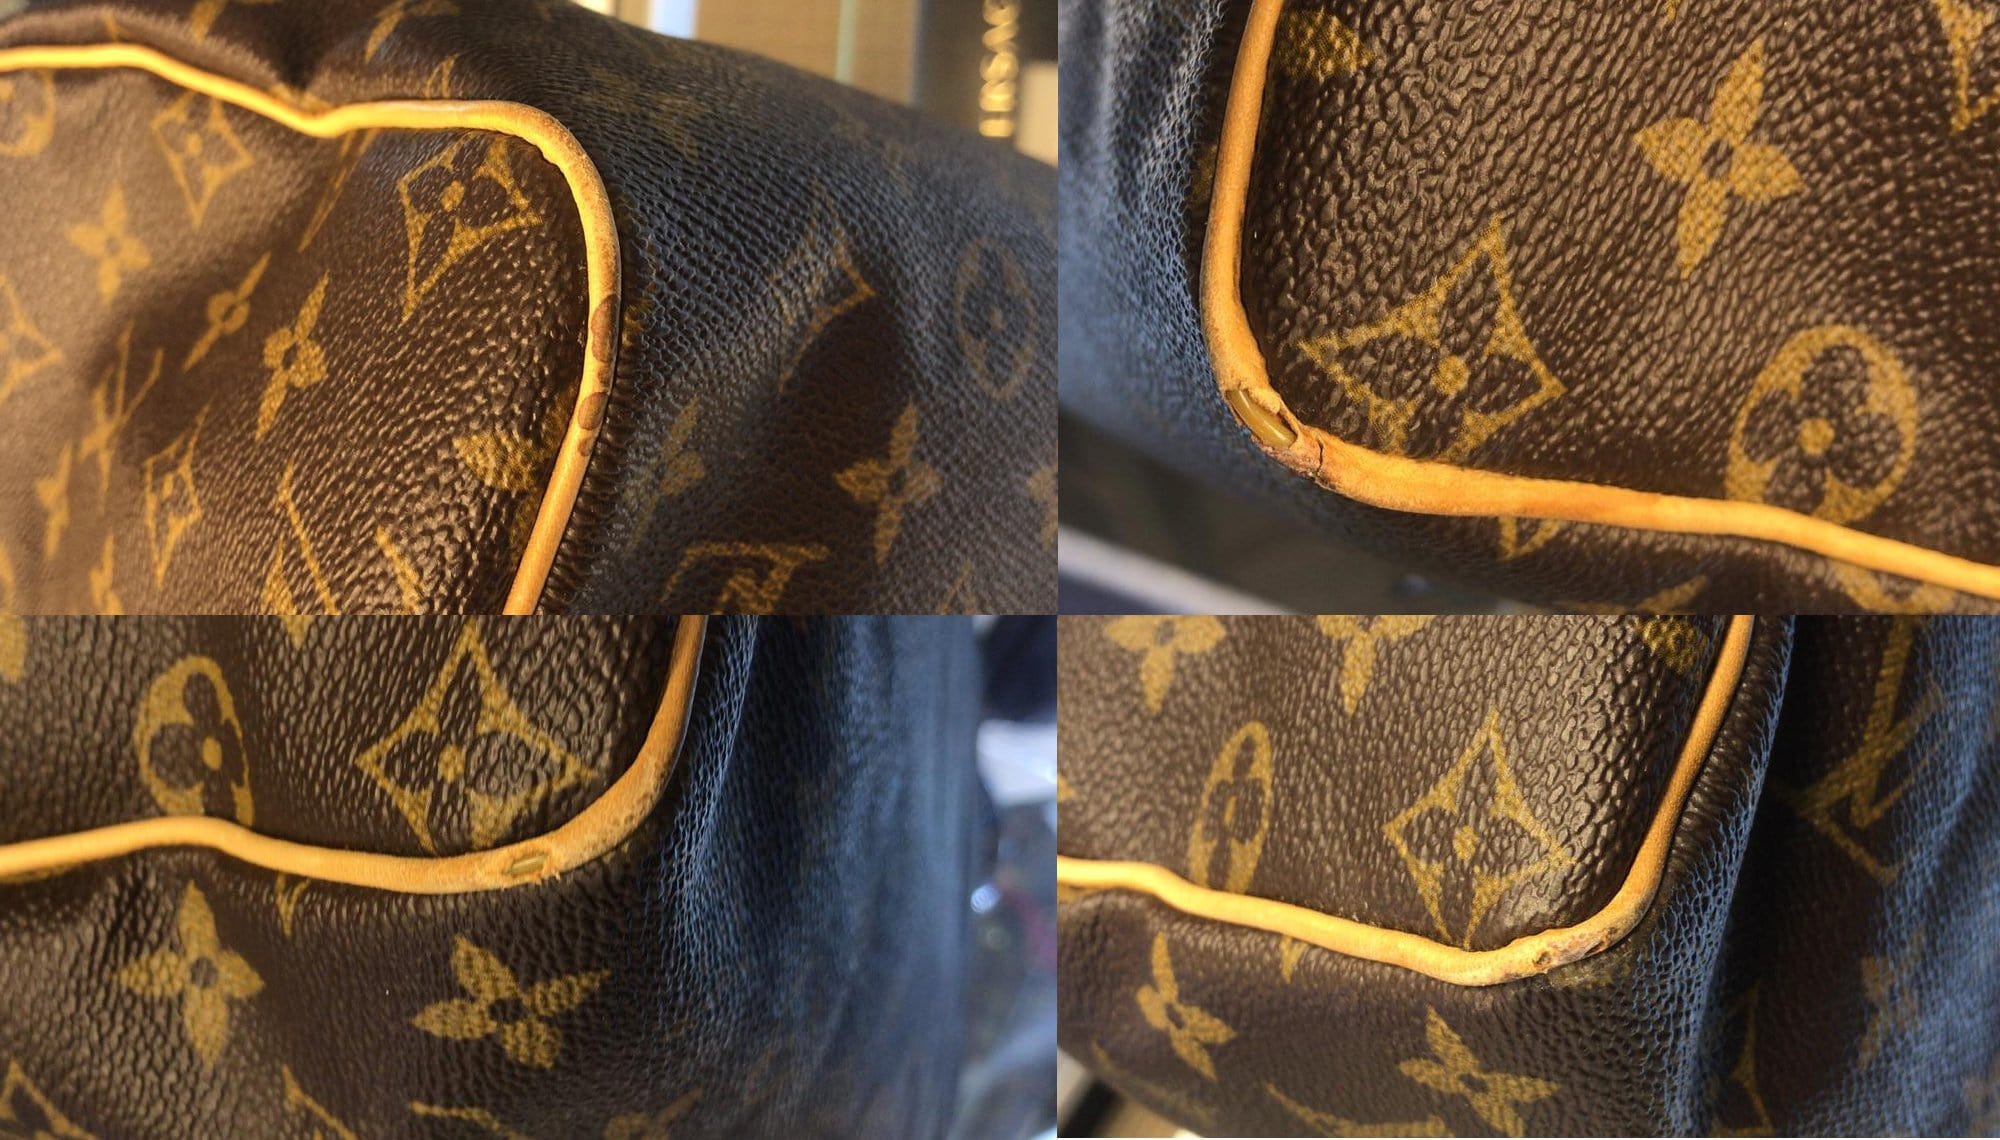 M41533 Louis Vuitton 2015 Summer Monogram V Speedy 30 Handbag- Turquoise